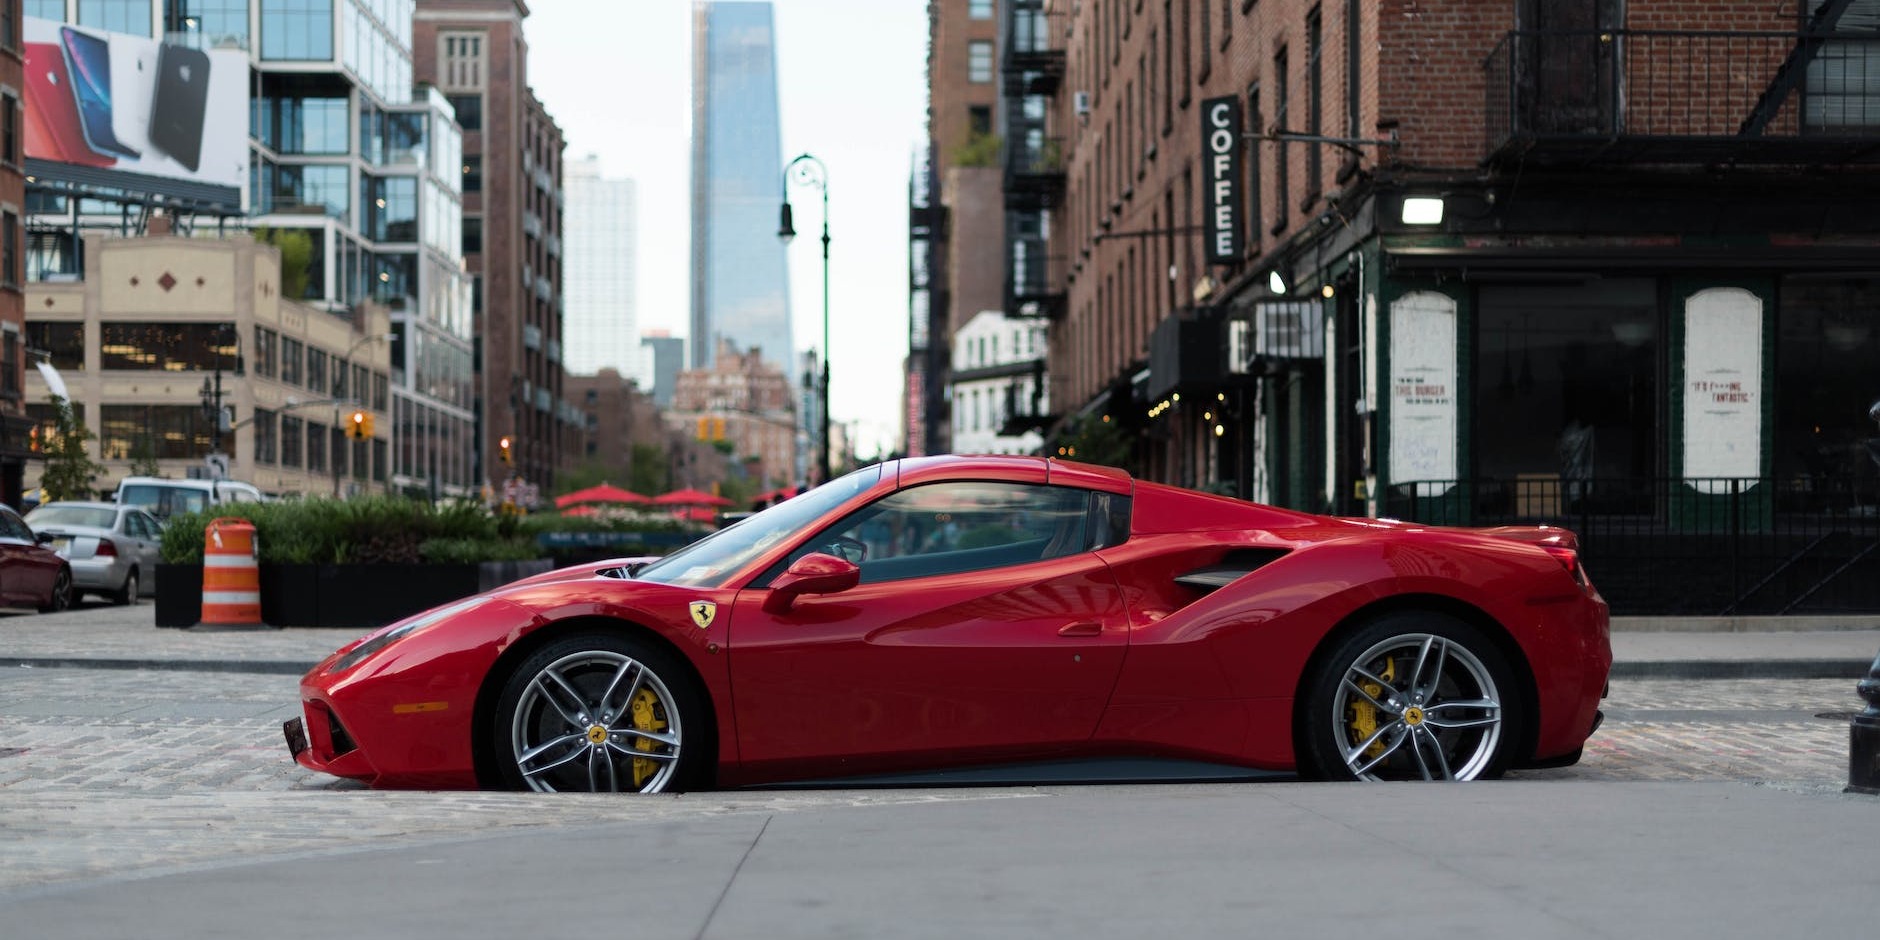 Exploring the Best Ferrari Experiences in London